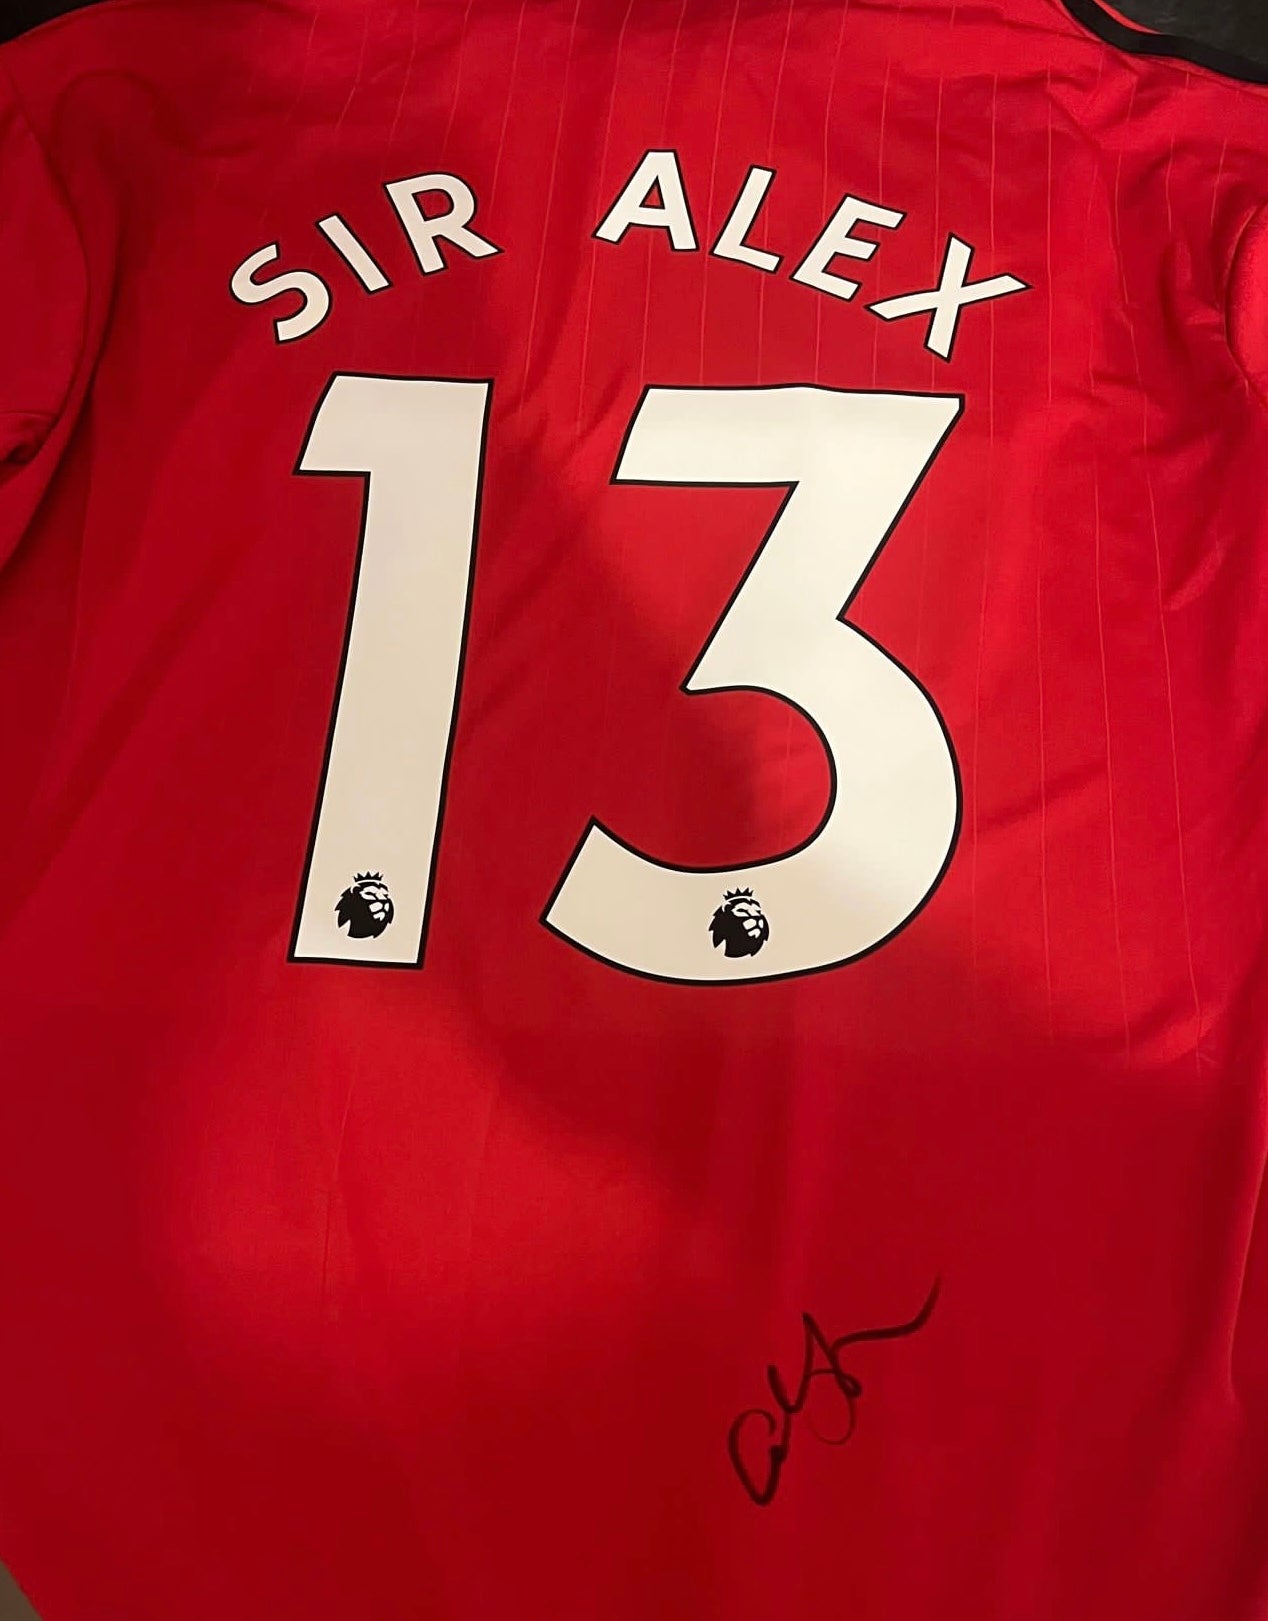 Signed Sir Alex Ferguson “Sir Alex 13” Manchester United Home Shirt